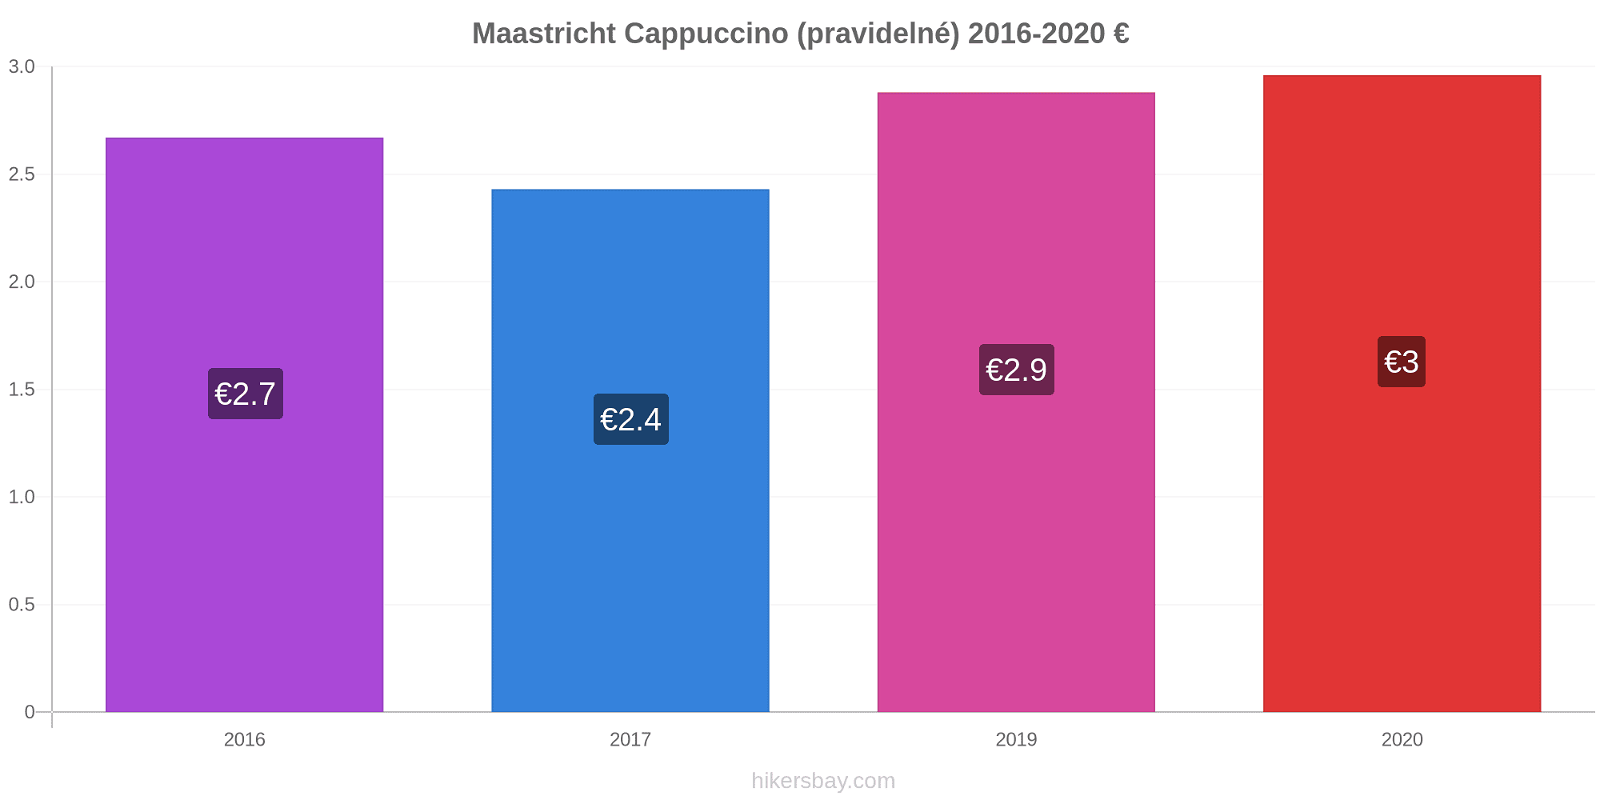 Maastricht změny cen Cappuccino (pravidelné) hikersbay.com